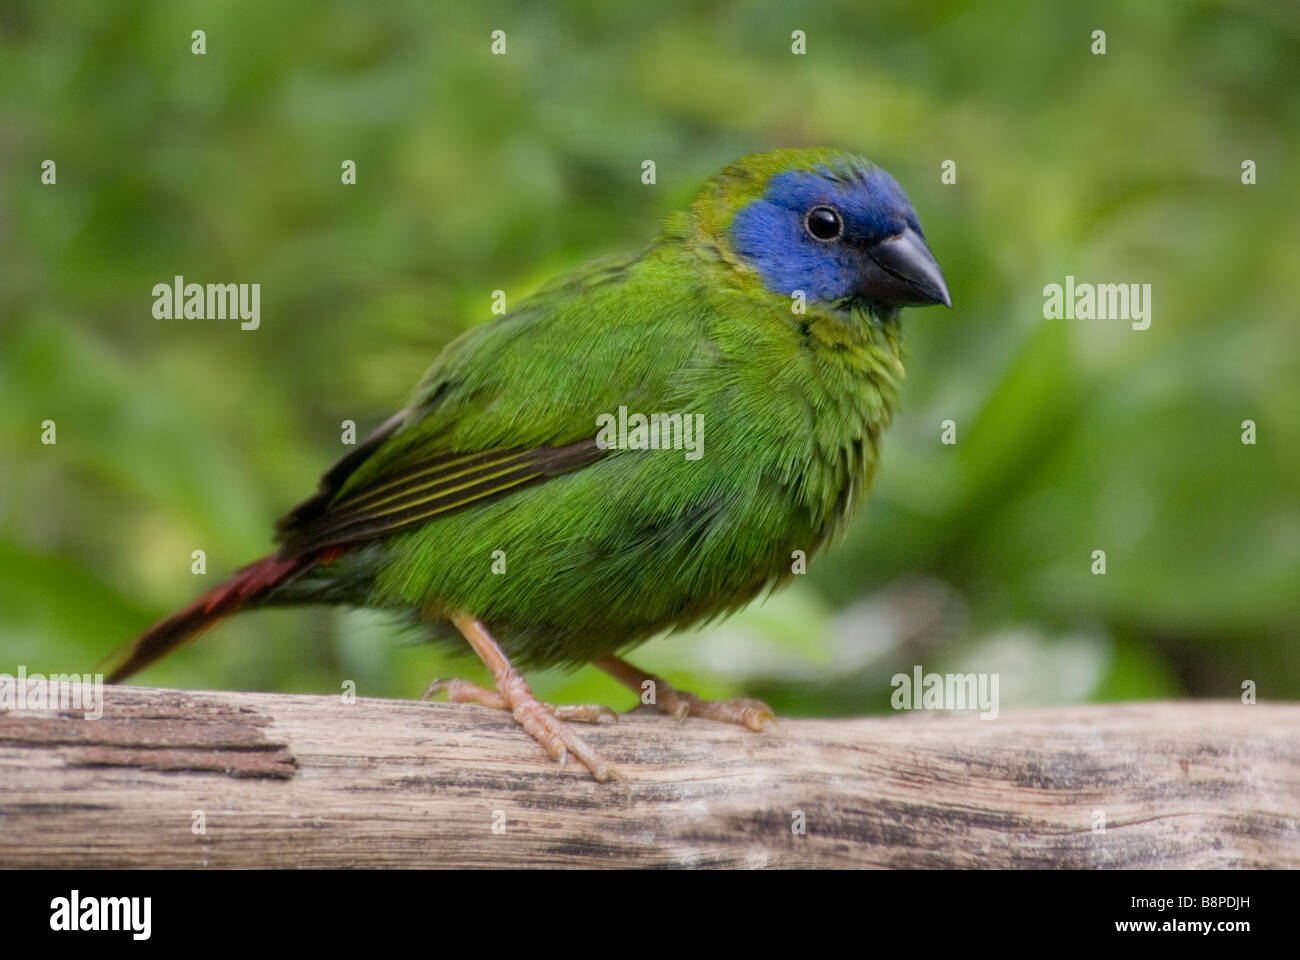 Blue-faced Parrot-finch 'Erythrura psittacea' Stock Photo